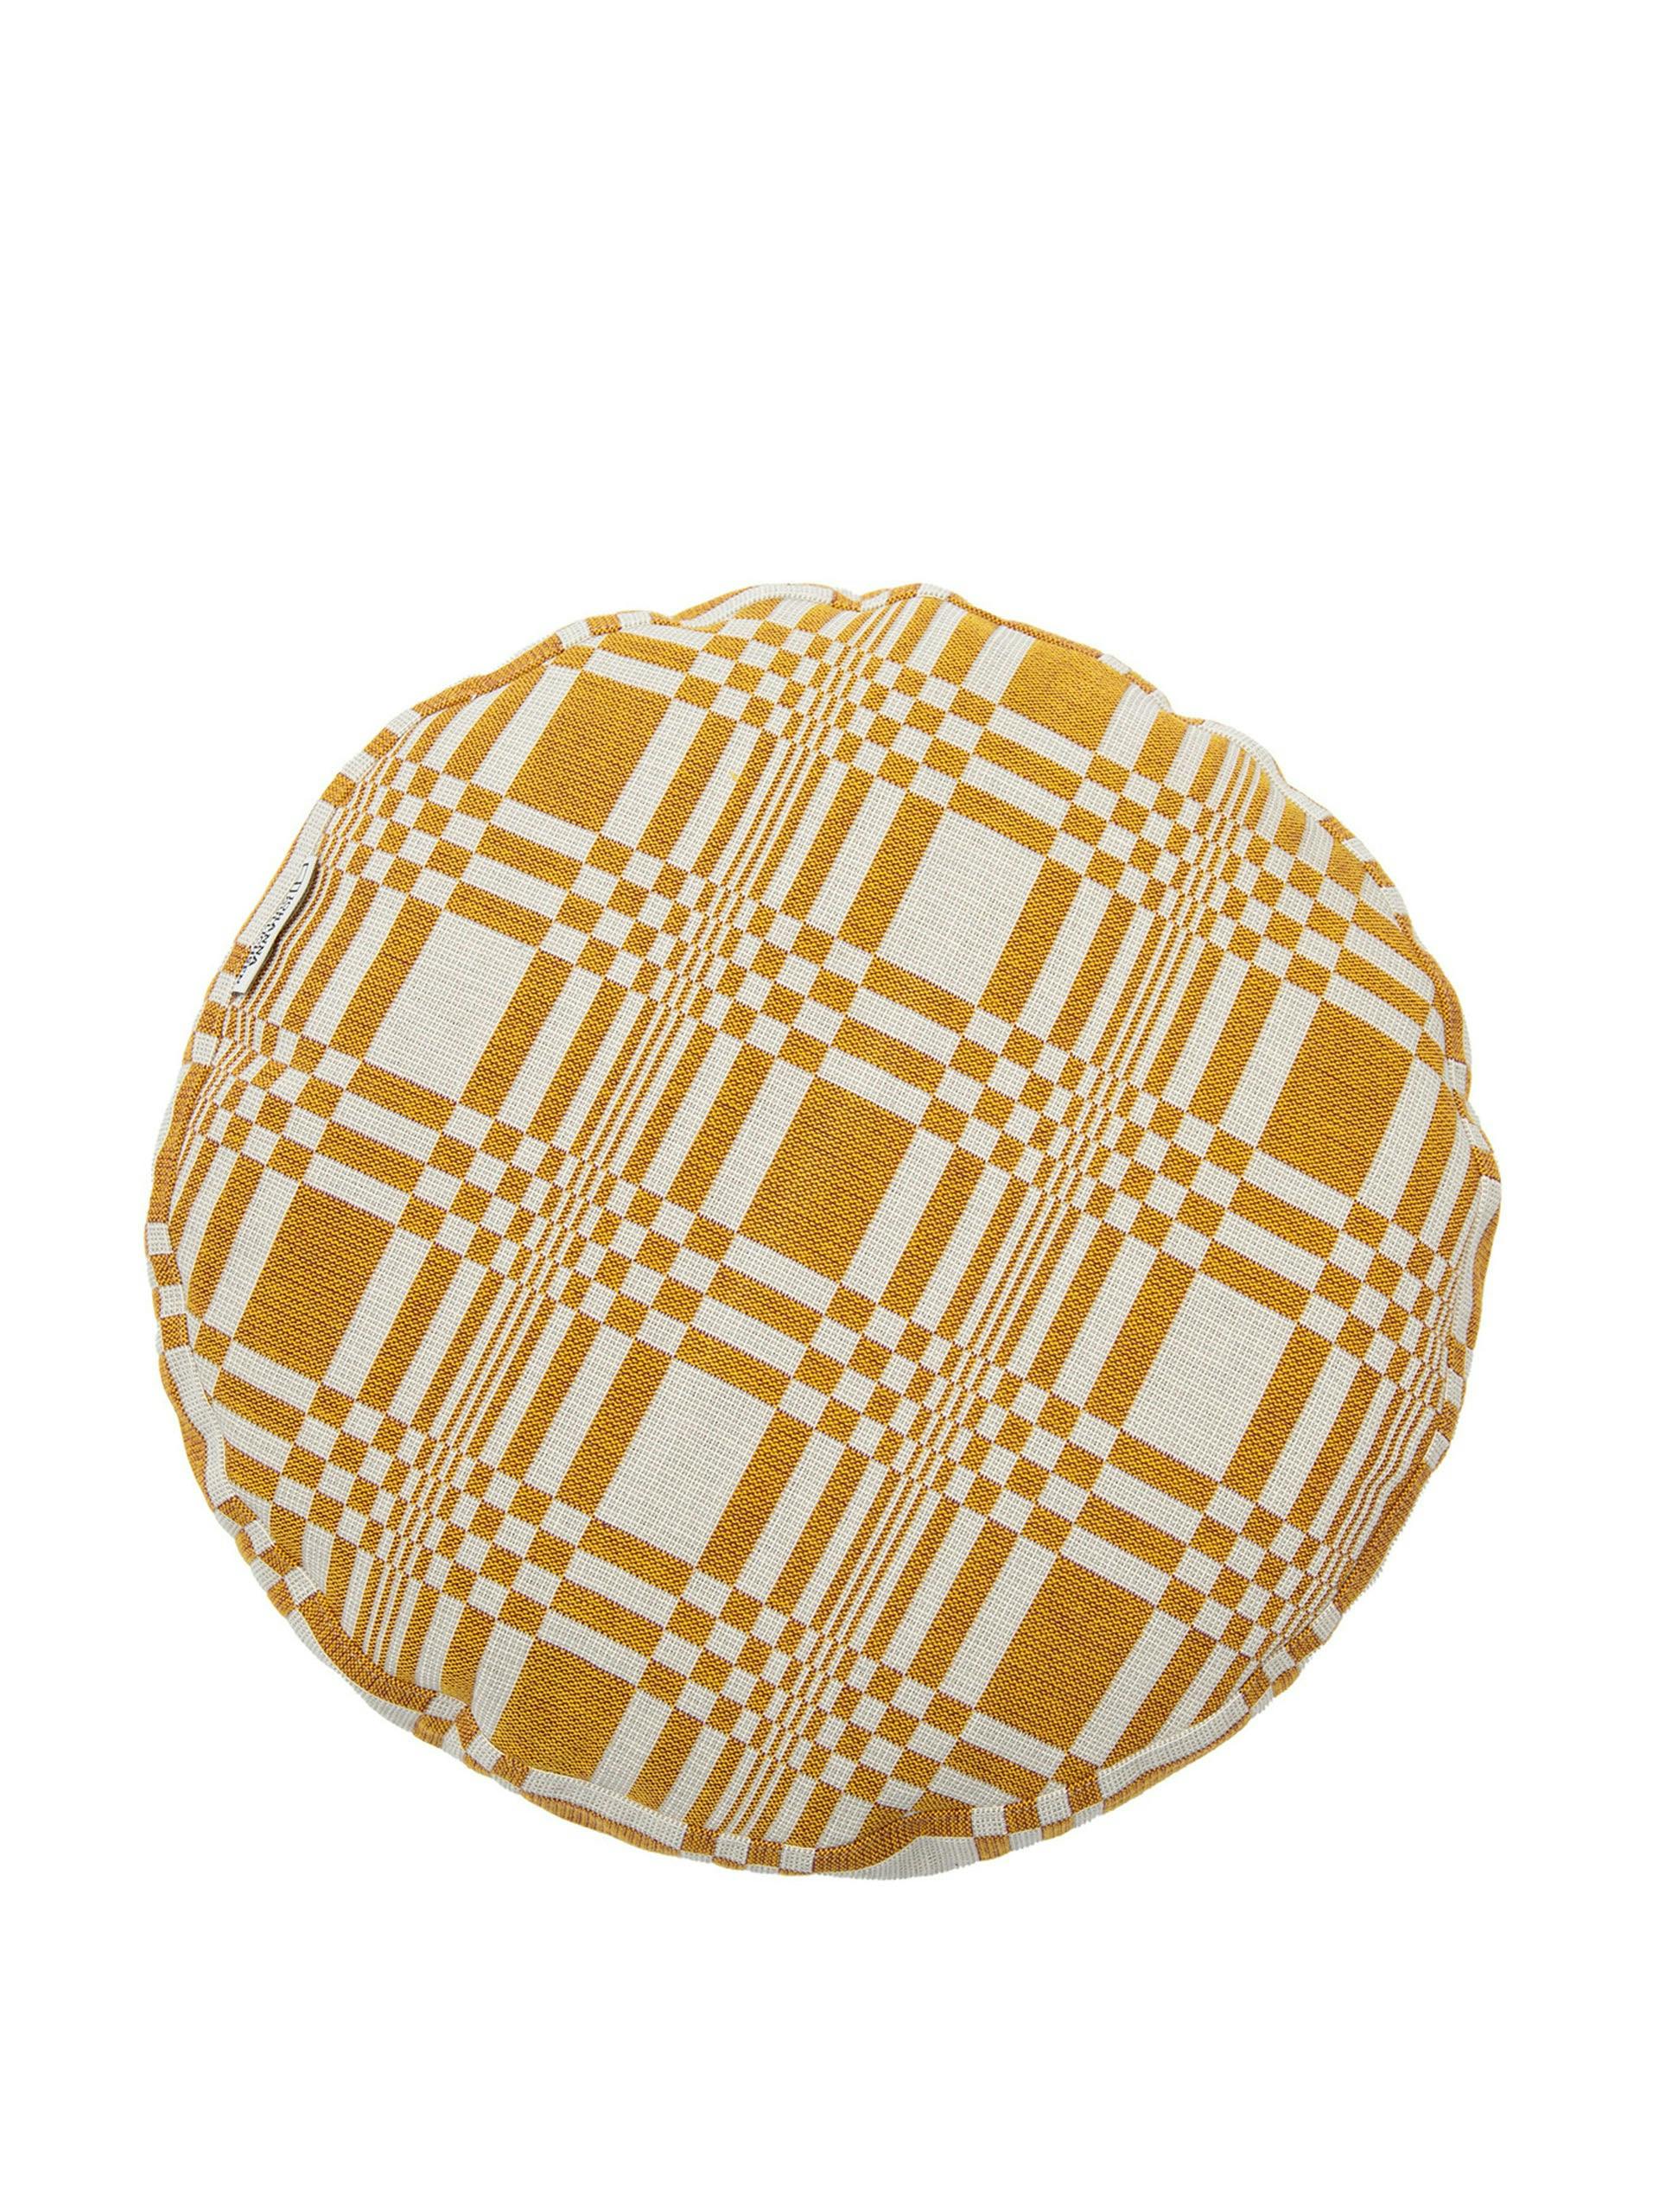 Yellow patterned round cushion